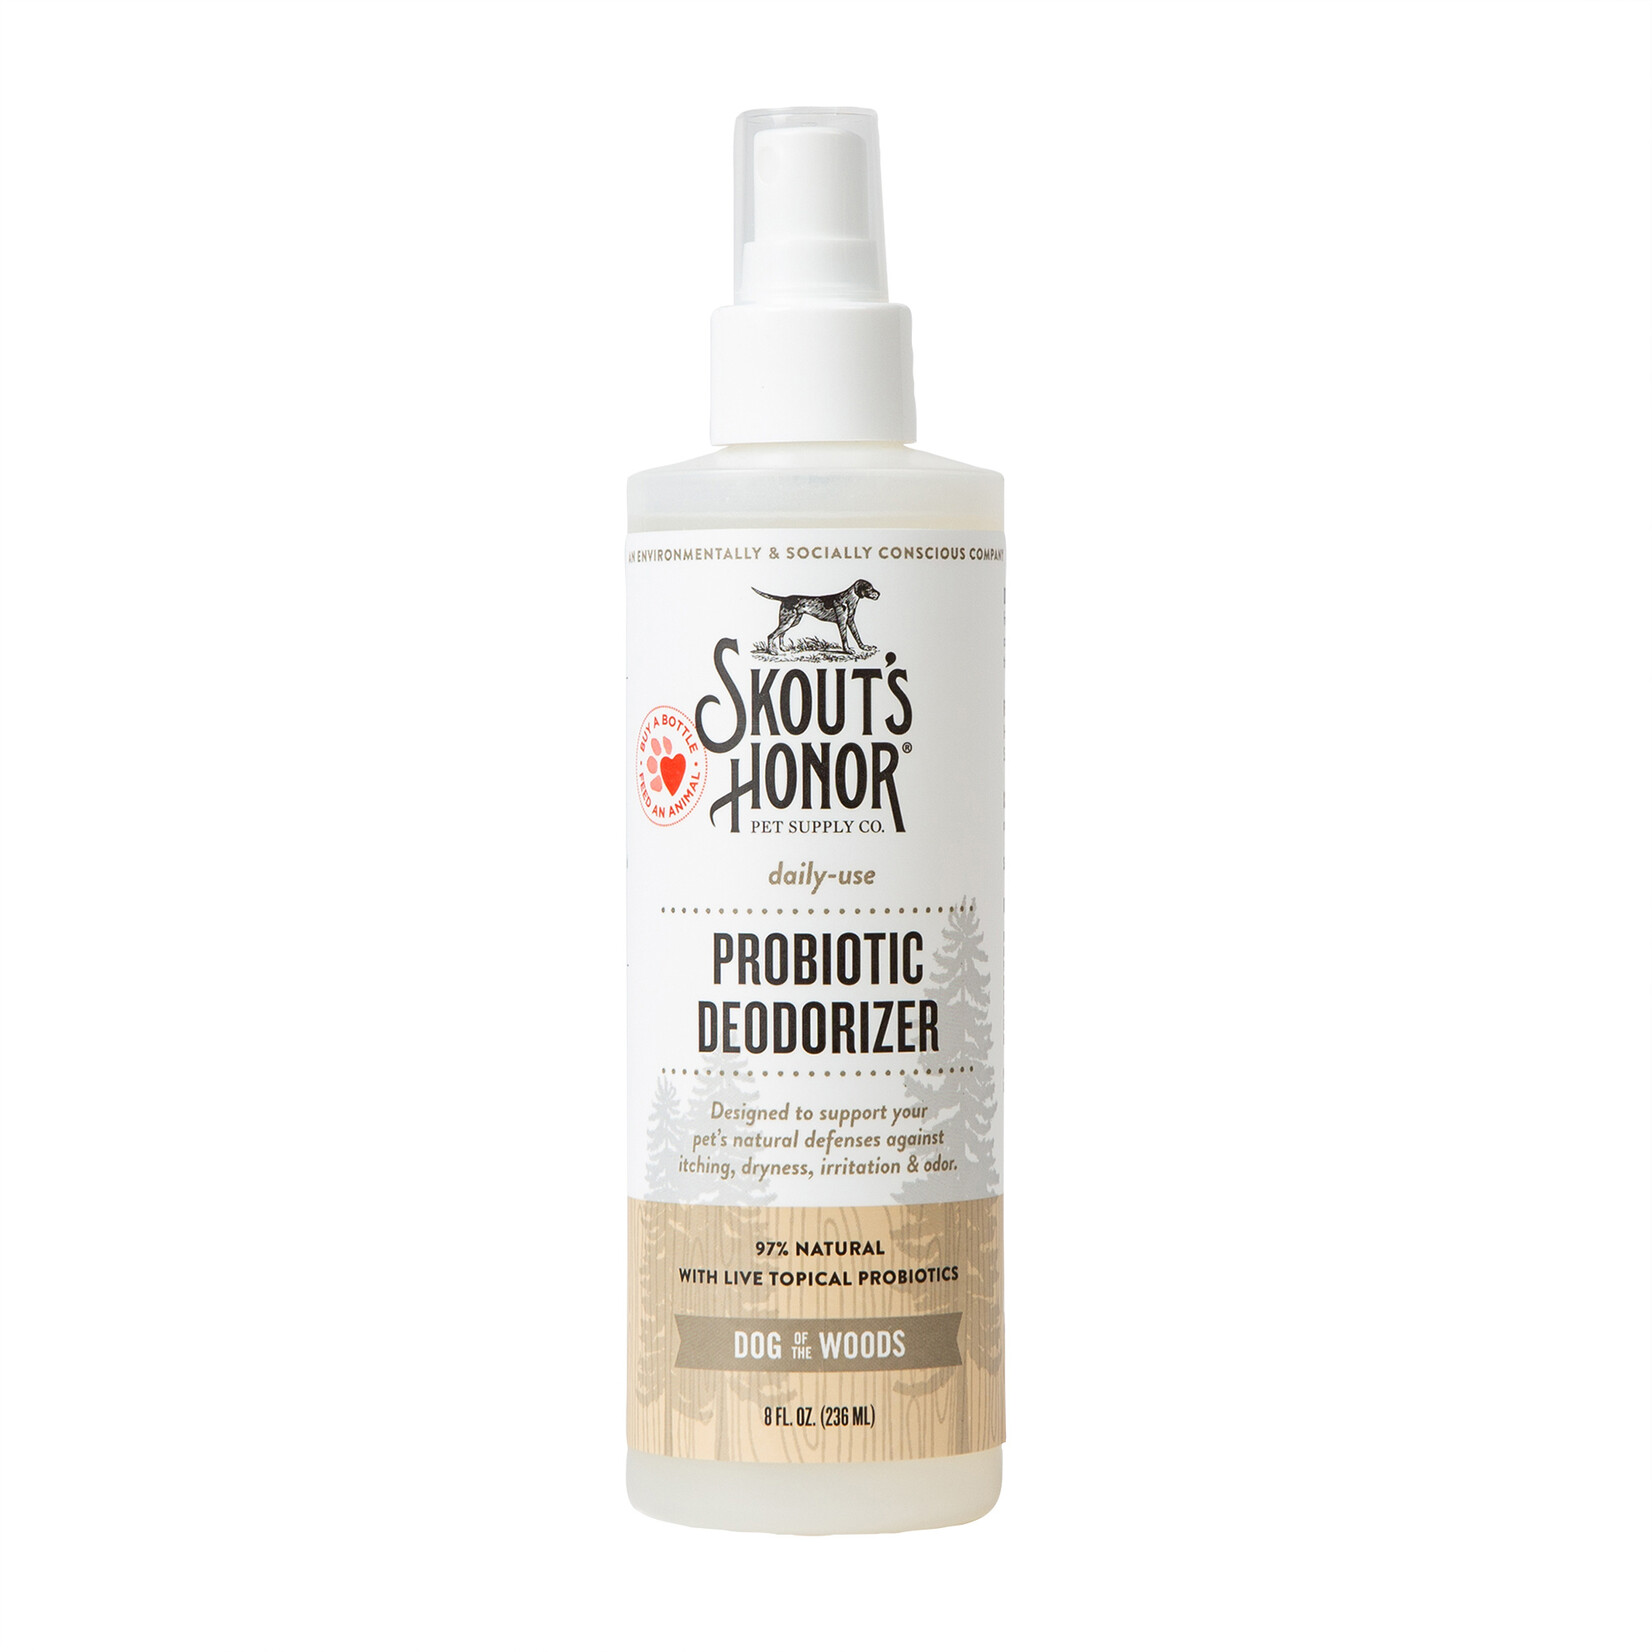 Skout's Honor Probiotic Deodorizer Spray for Dogs, 8oz